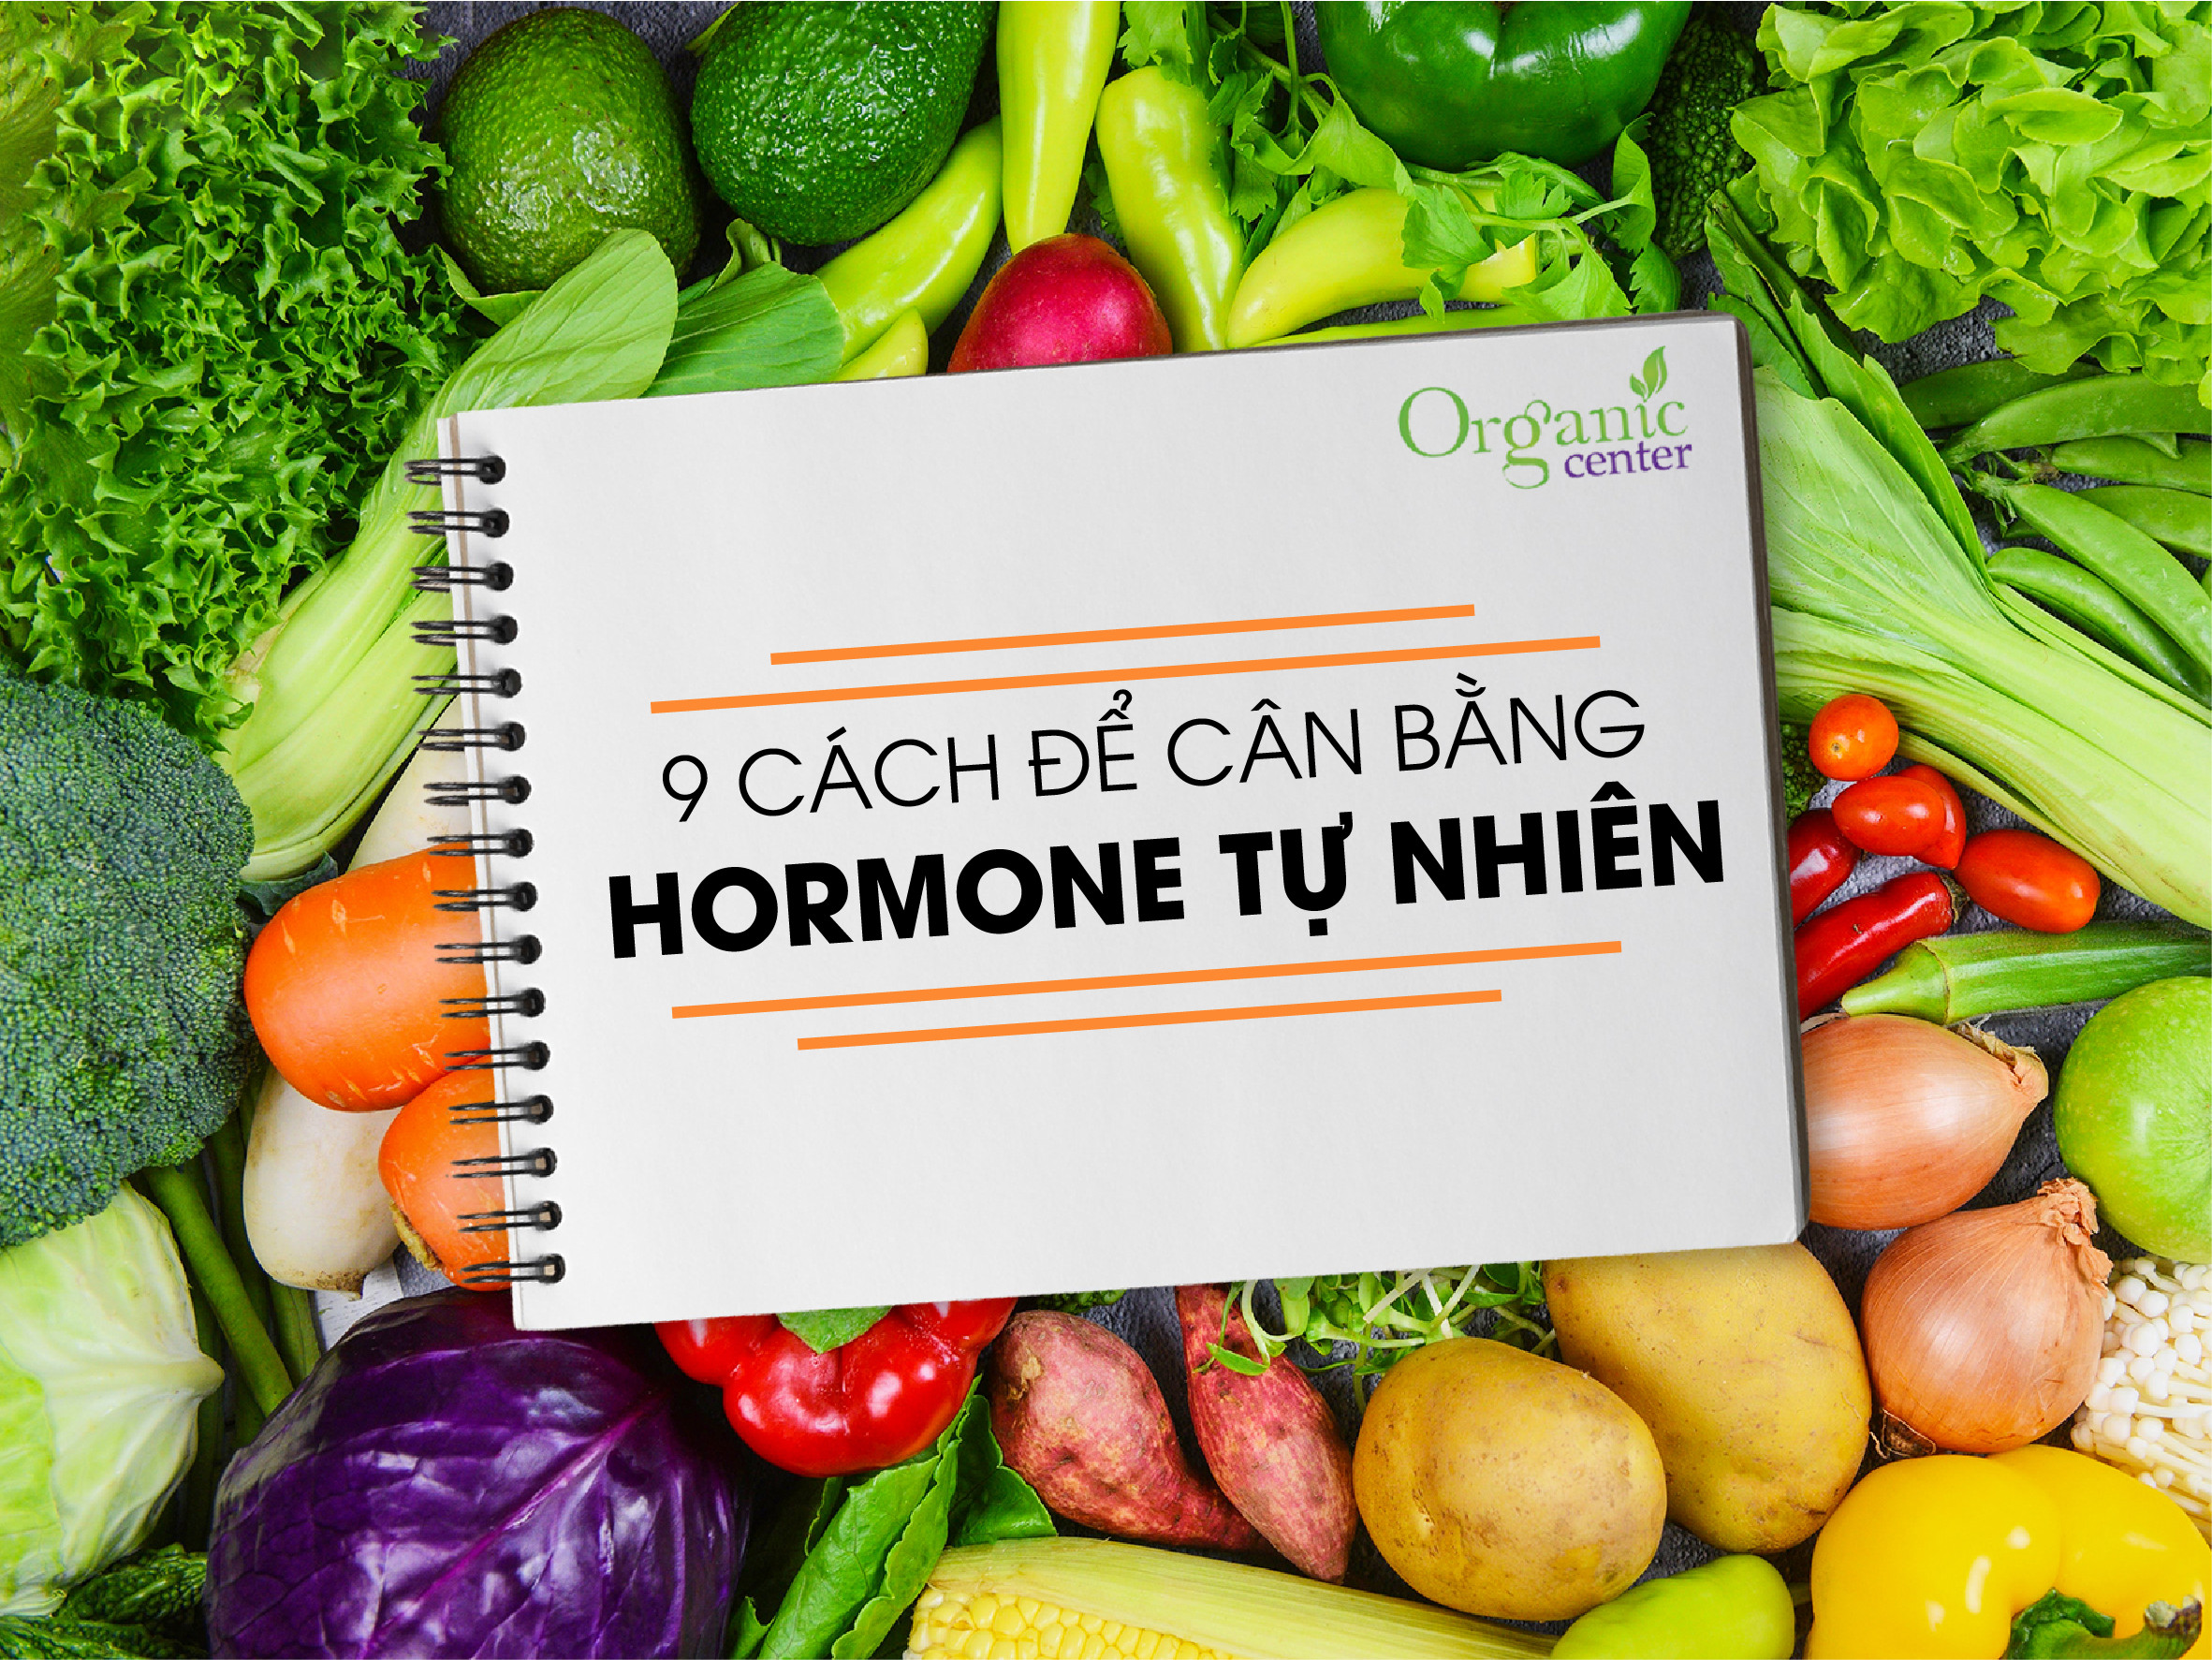 9 cách để cân bằng hormone tự nhiên